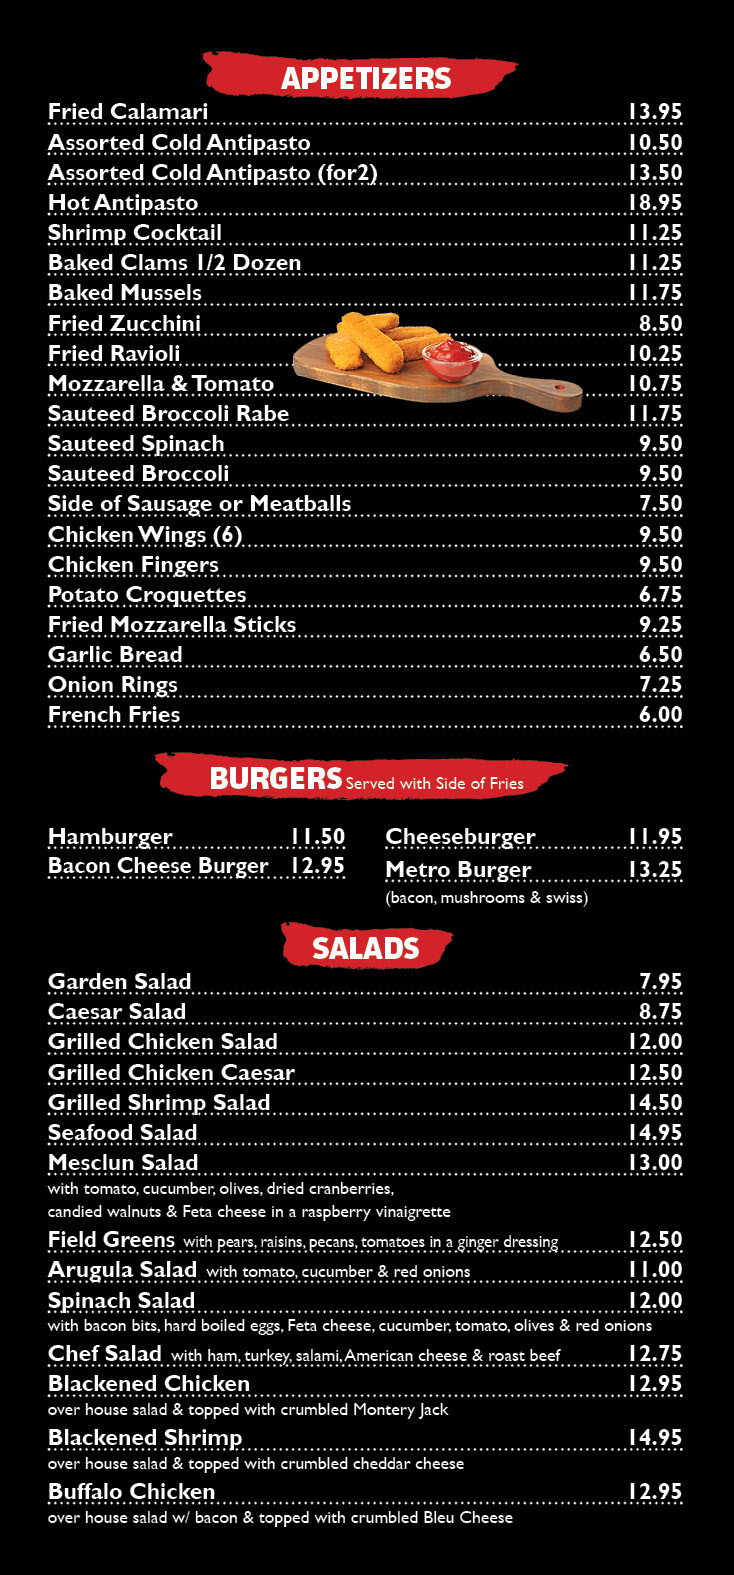 Appetizers - Burgers - Salads